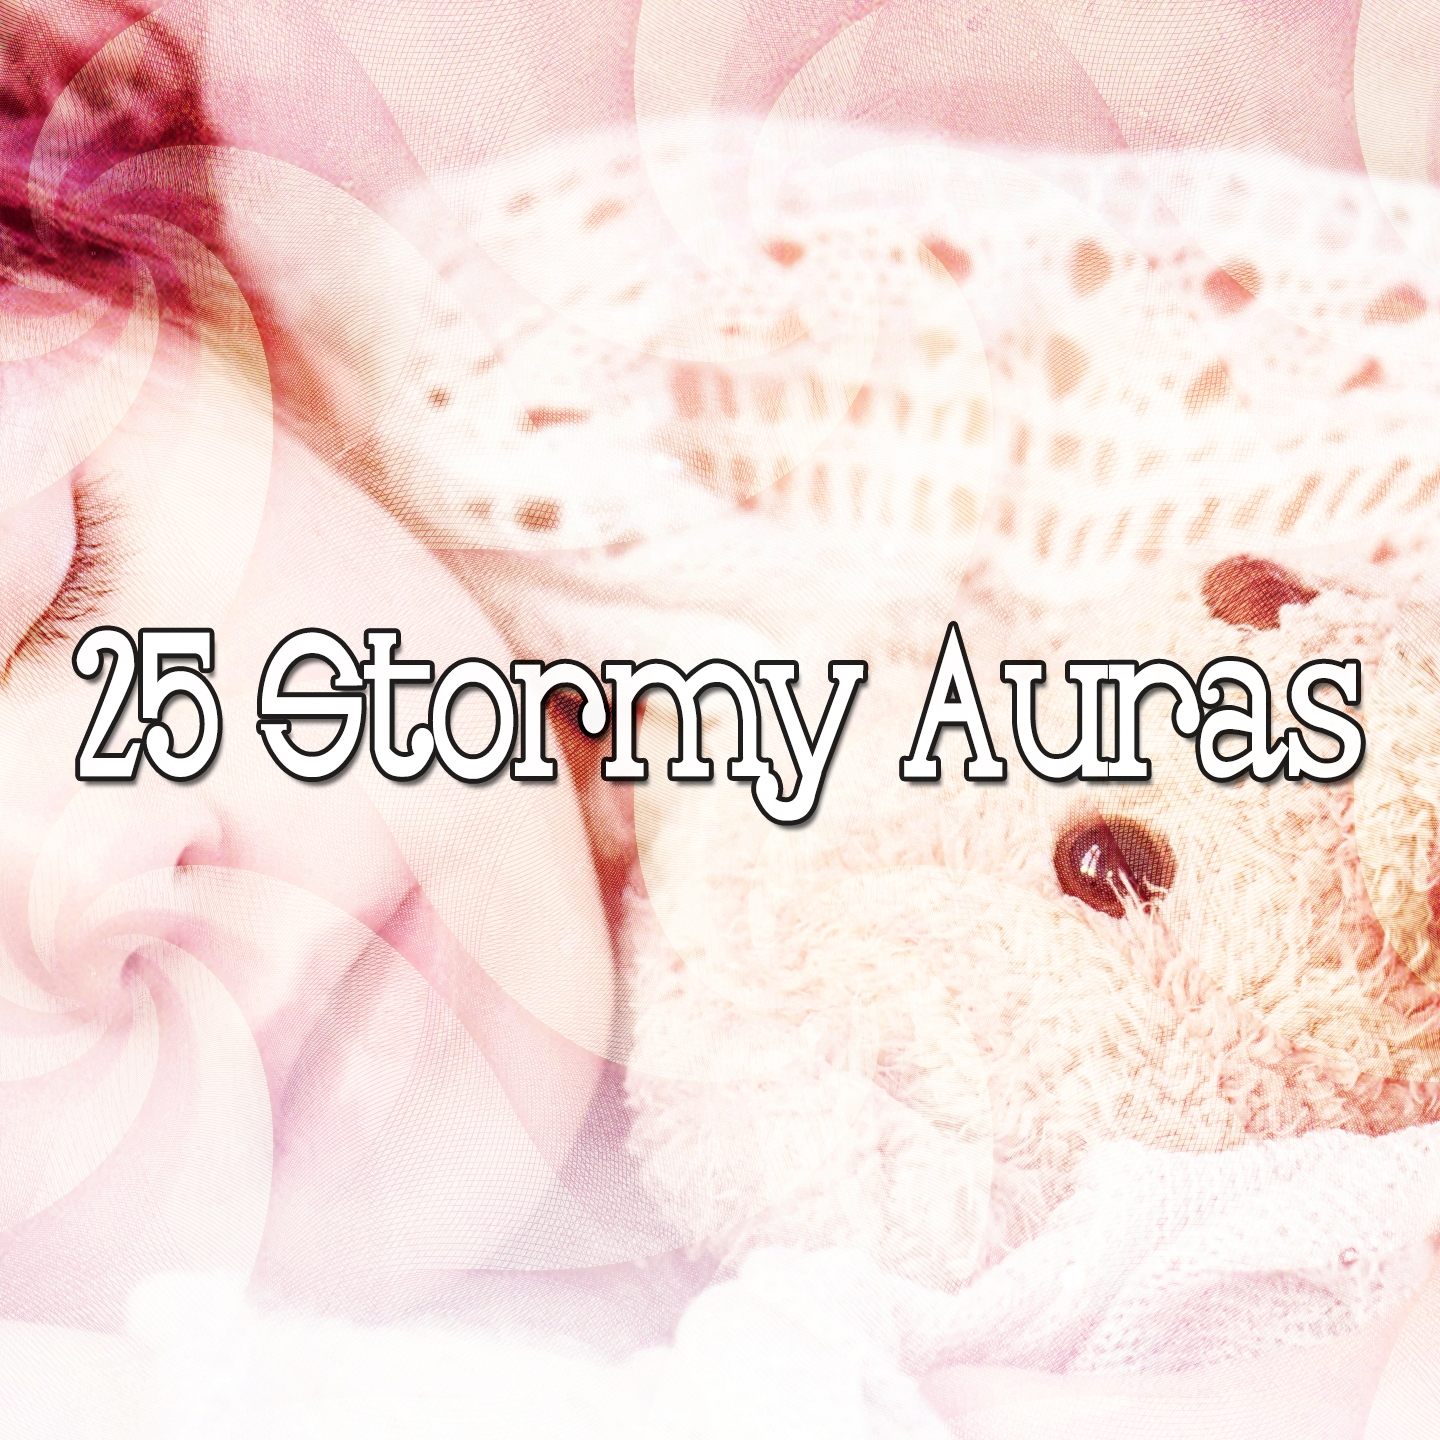 25 Stormy Auras